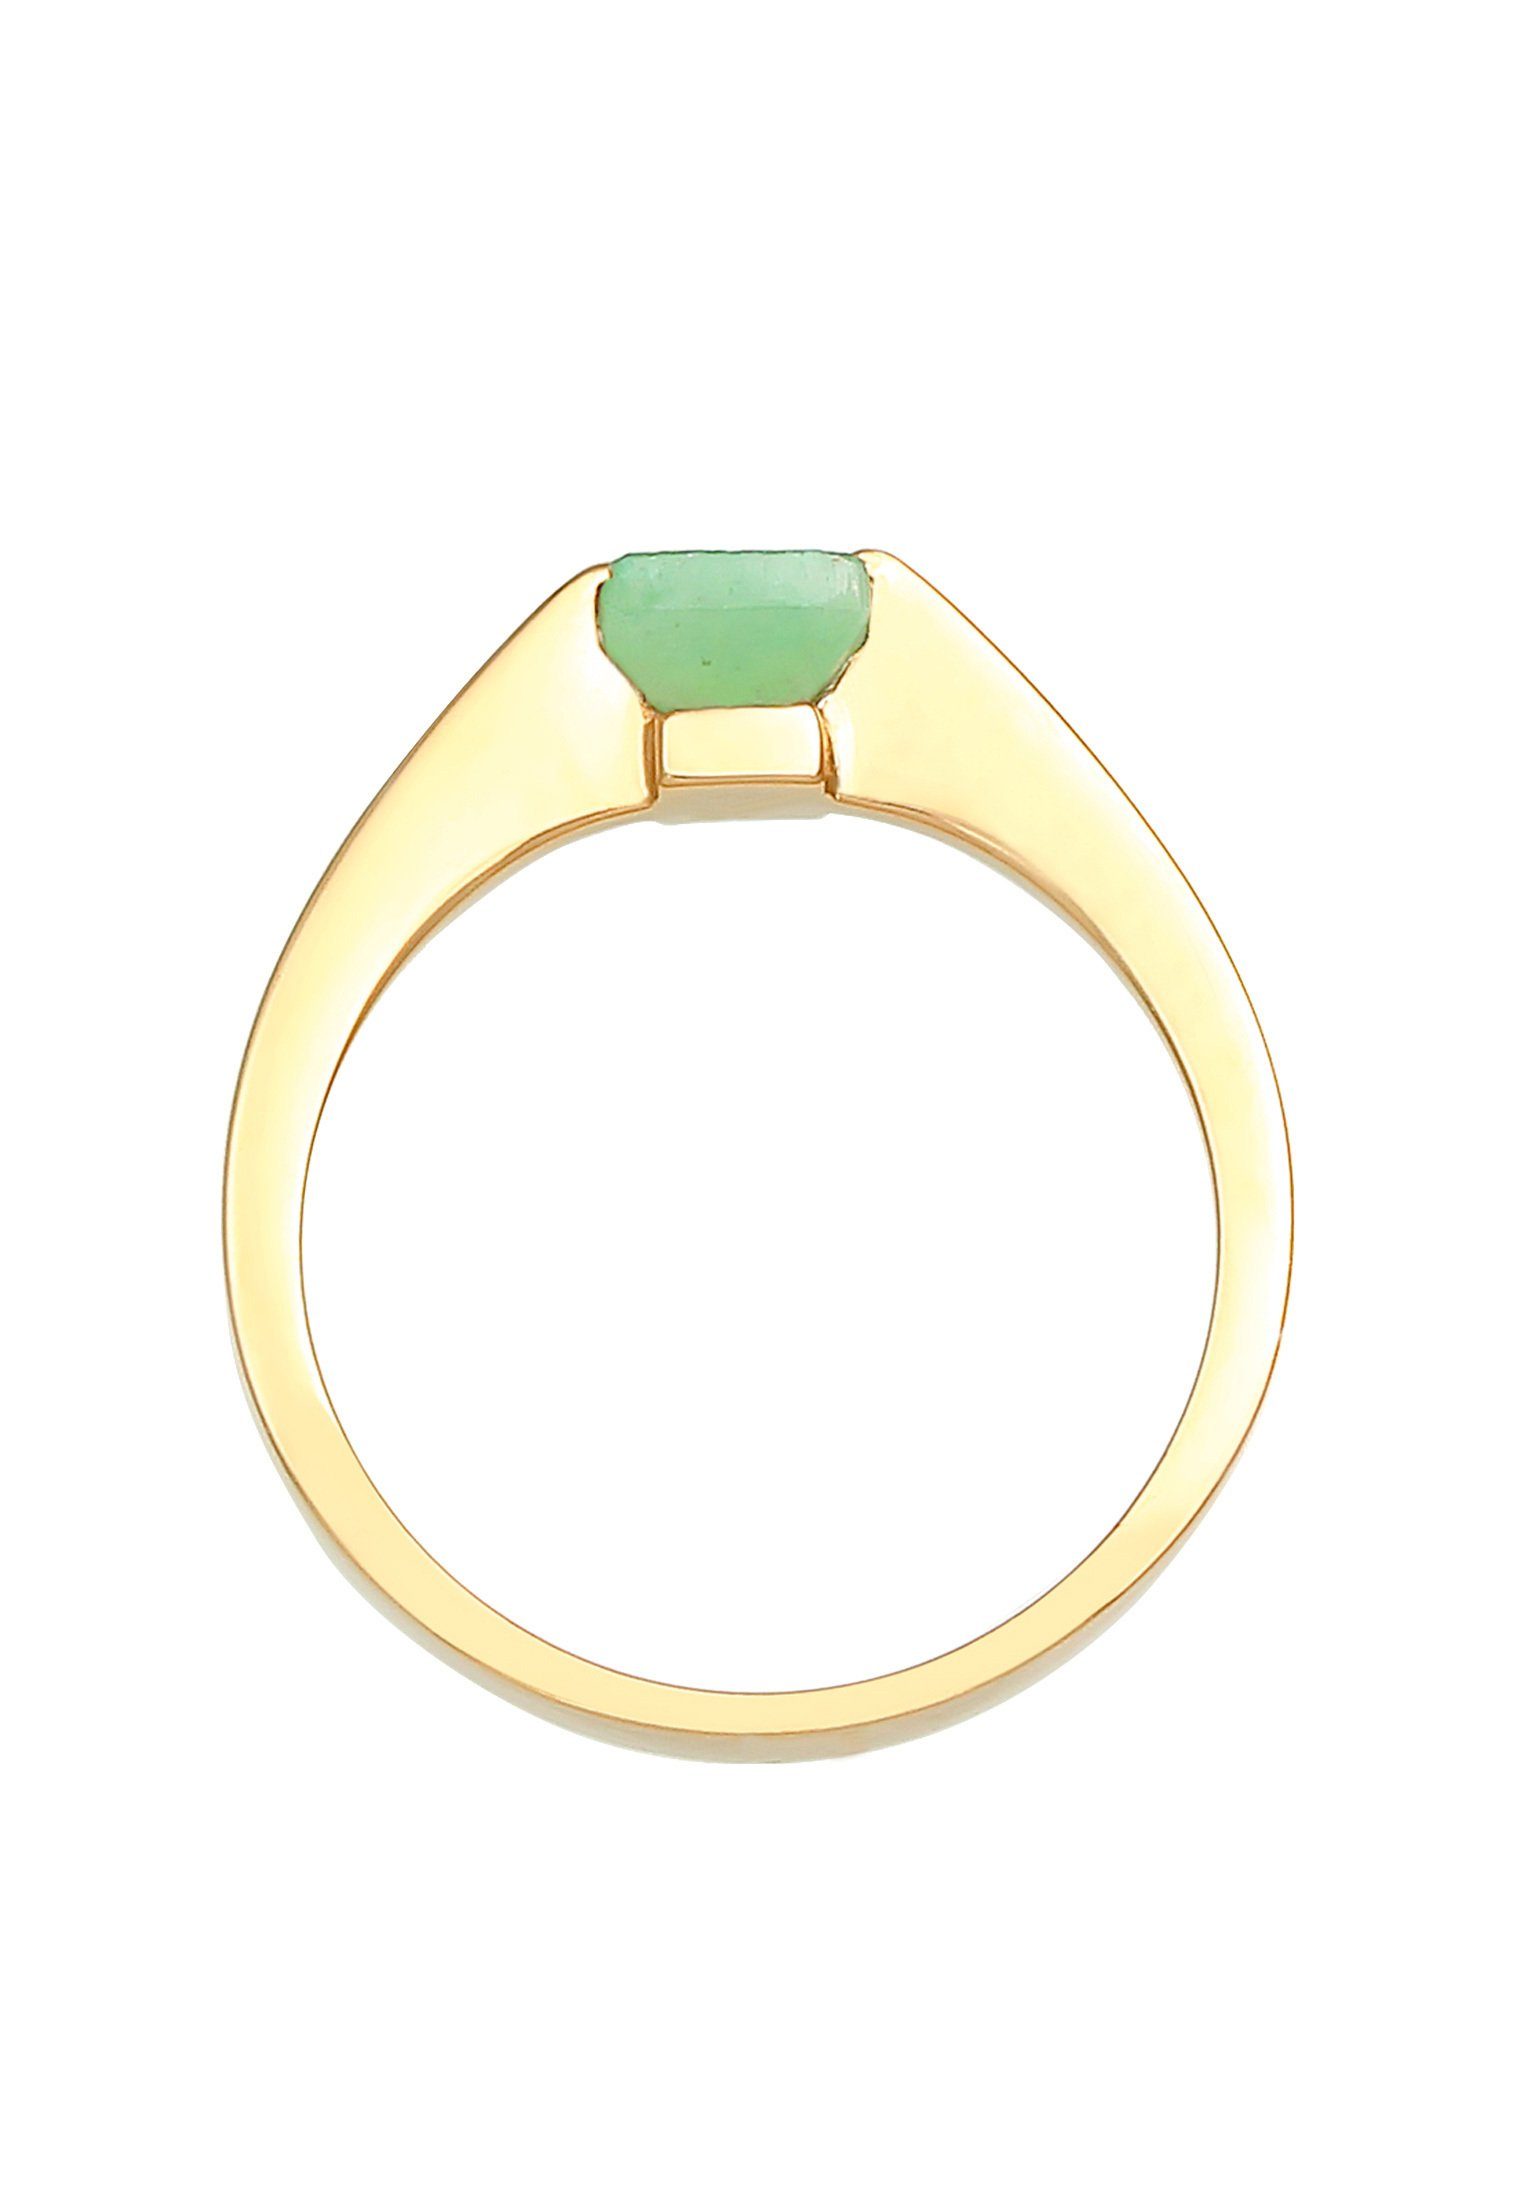 Grün Dreieck Elli Premium Jade Fingerring vergoldet Silber klassik 925